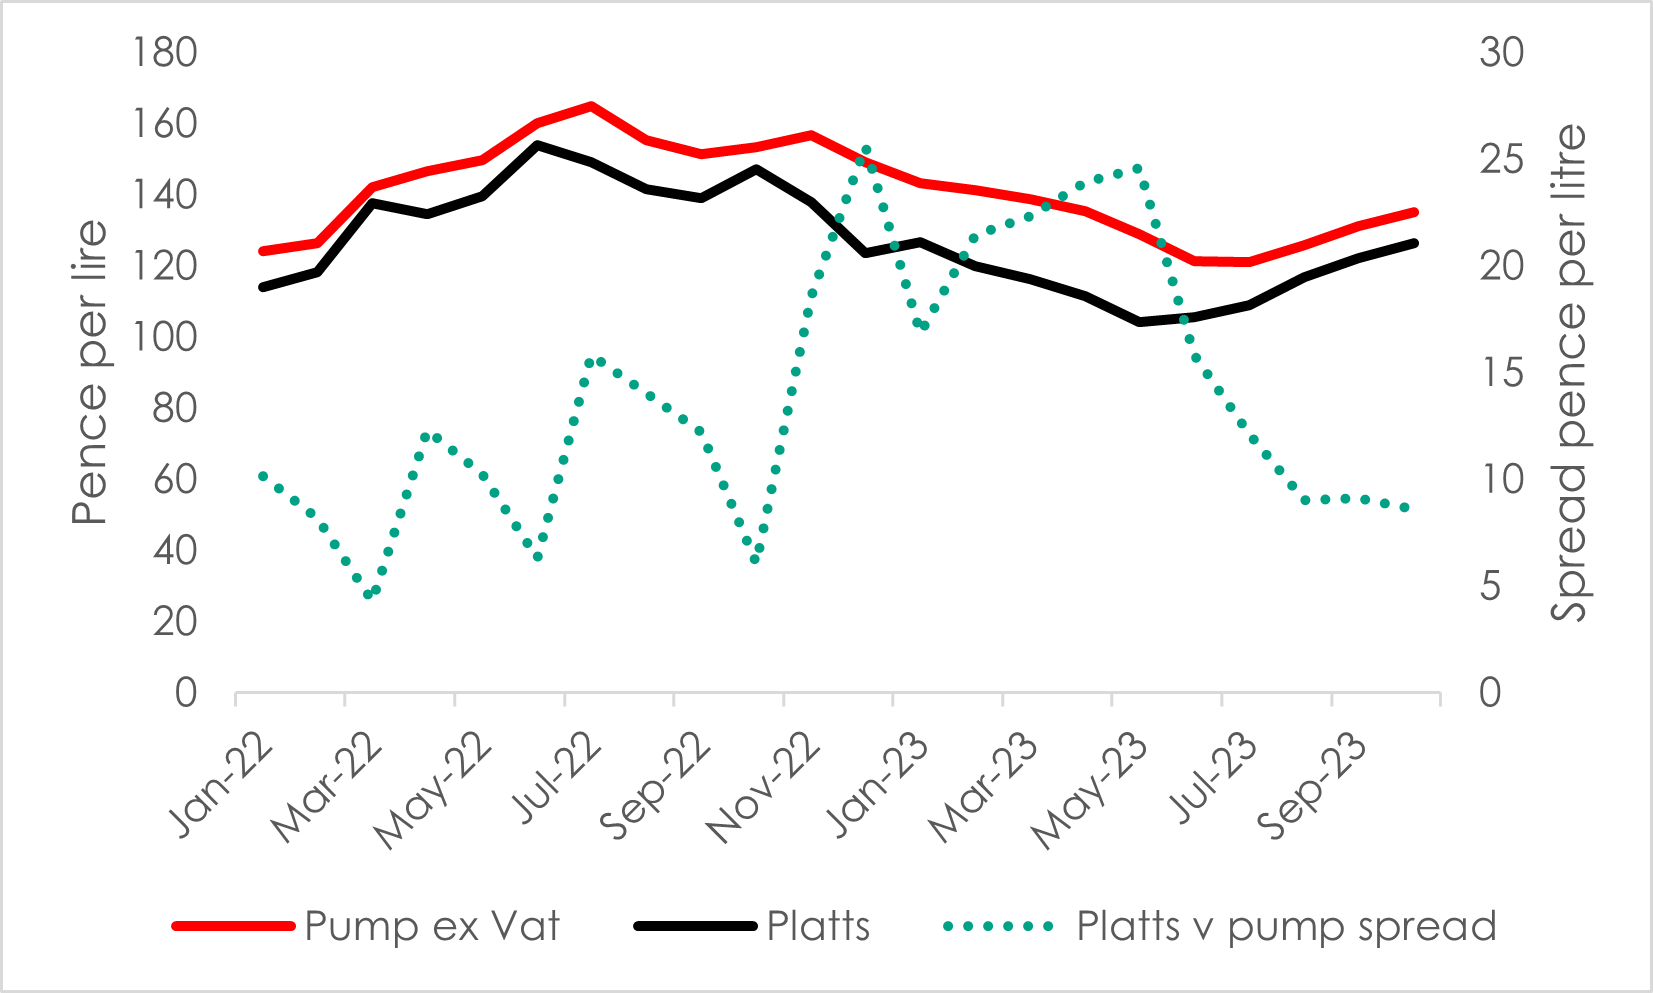 Platts vs pump price 2022-23